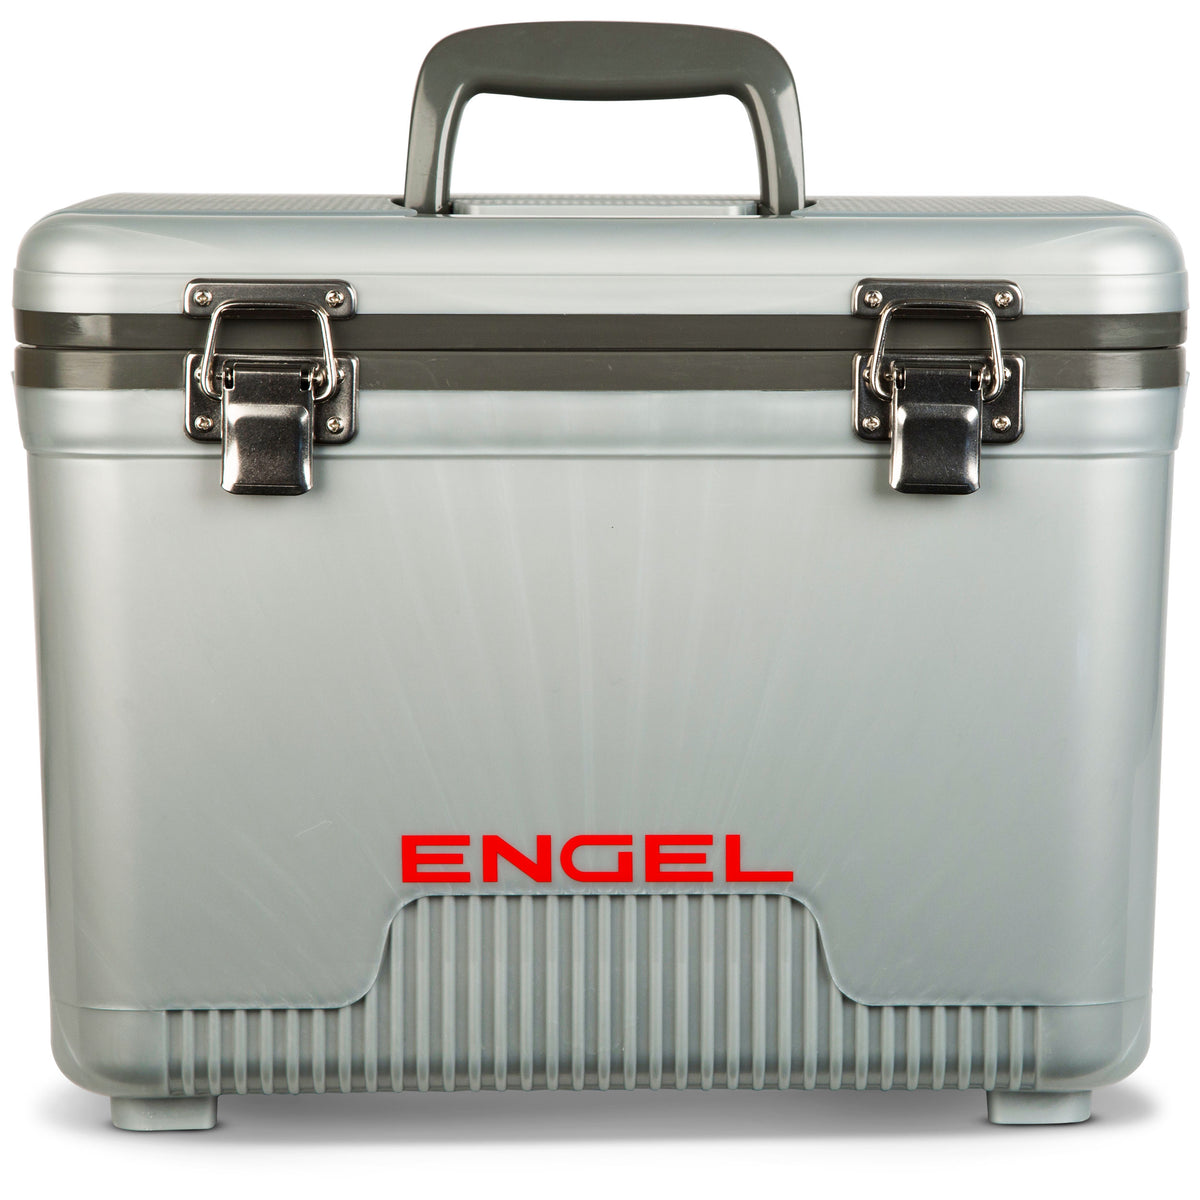 Engel 13 Quart Drybox/Cooler - Silver